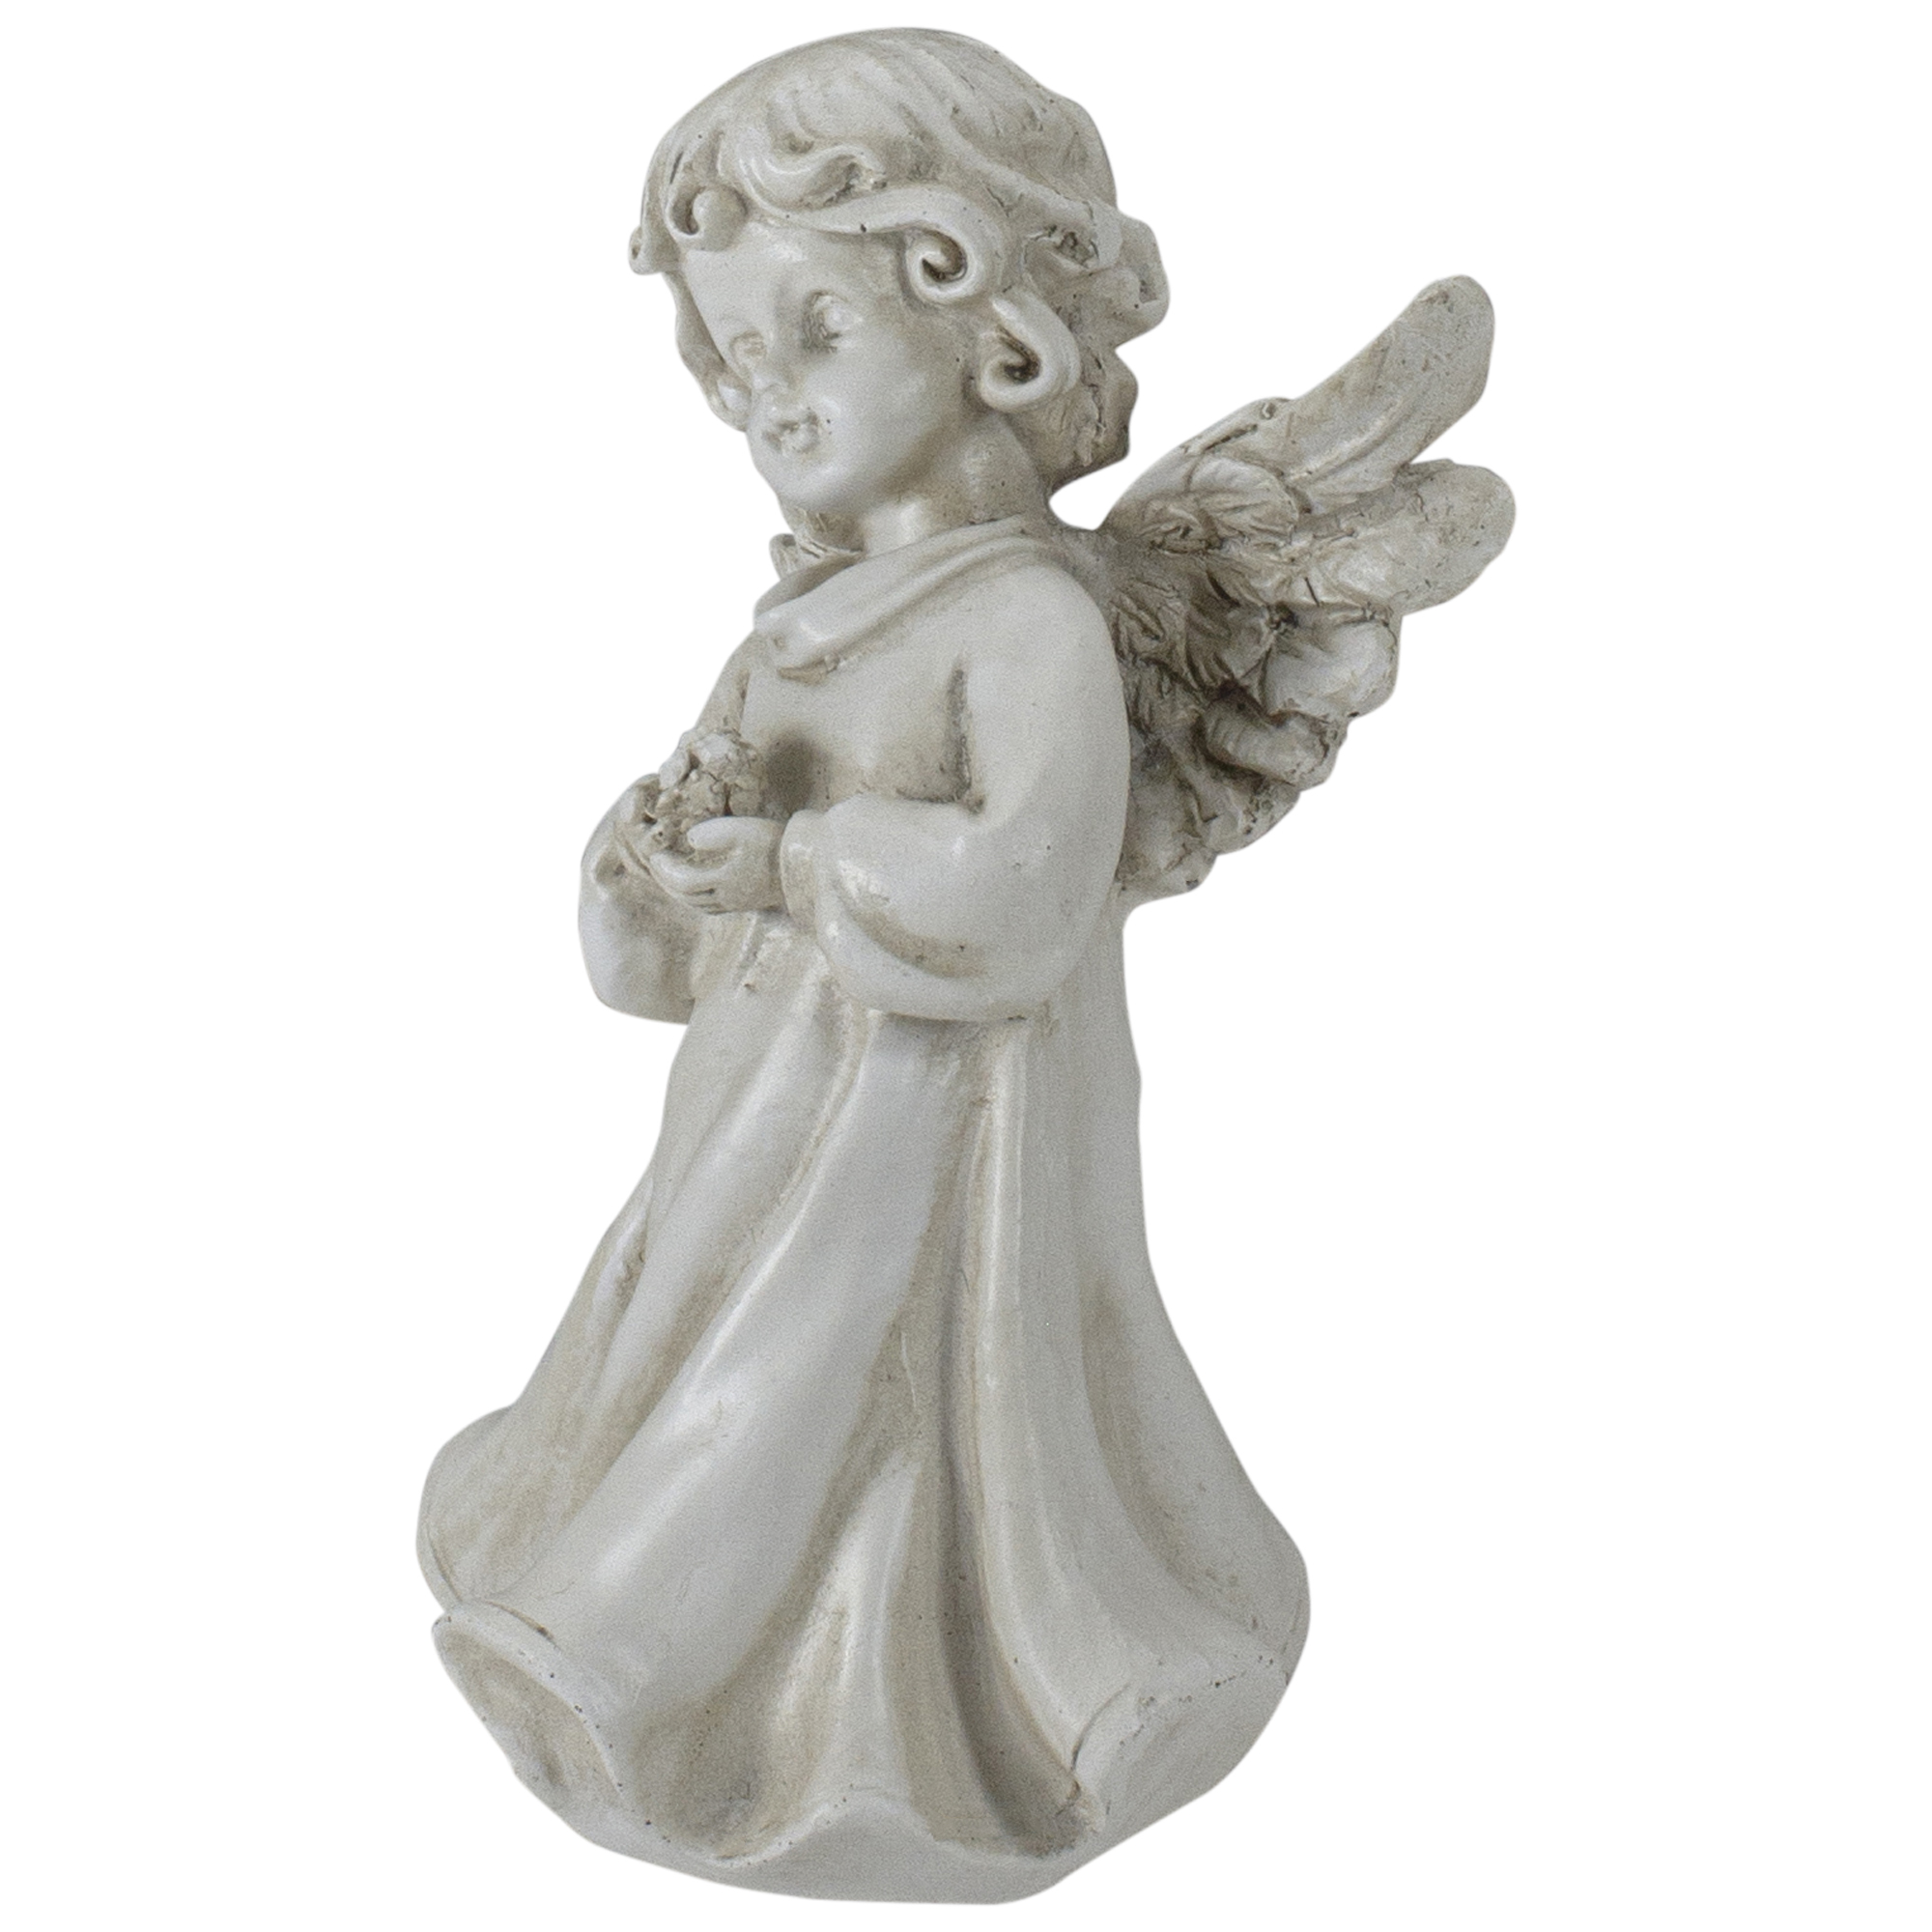 Northlight 6.5" Angel Girl Holding Flower Outdoor Garden Statue - image 5 of 5